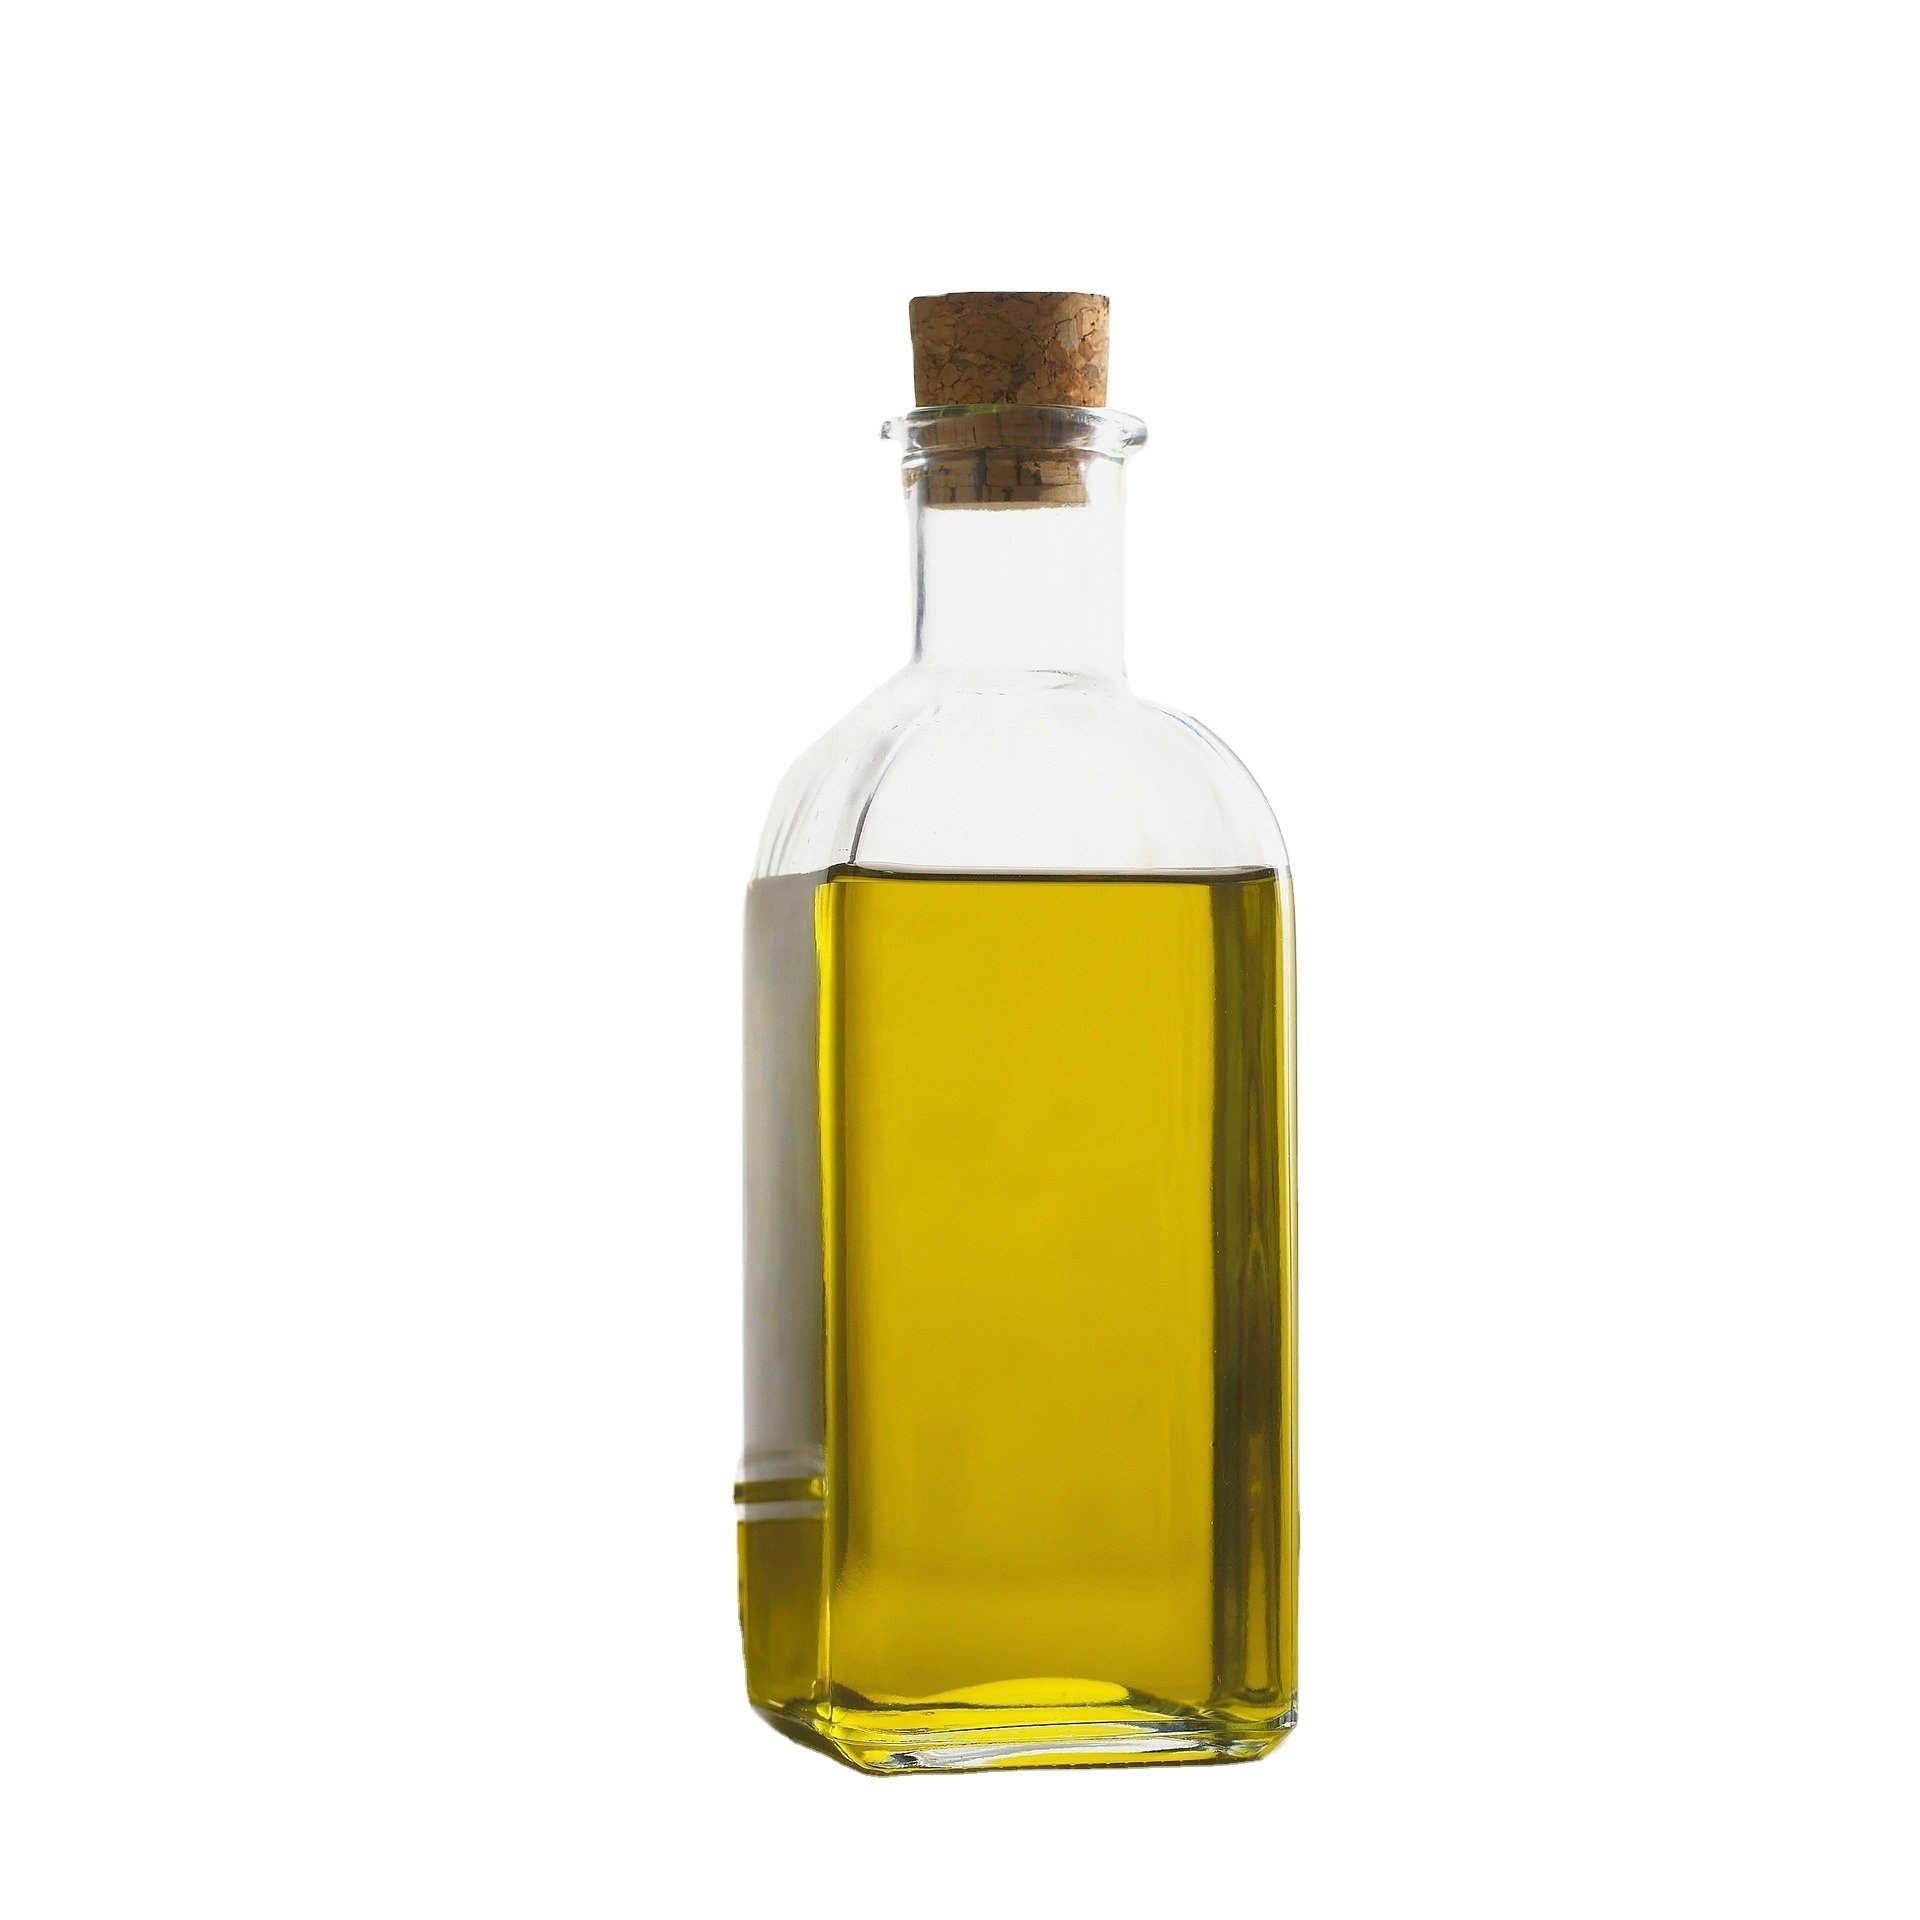 Pine nut oil / cedar wood oil best price 100% pure natural source of vitamin